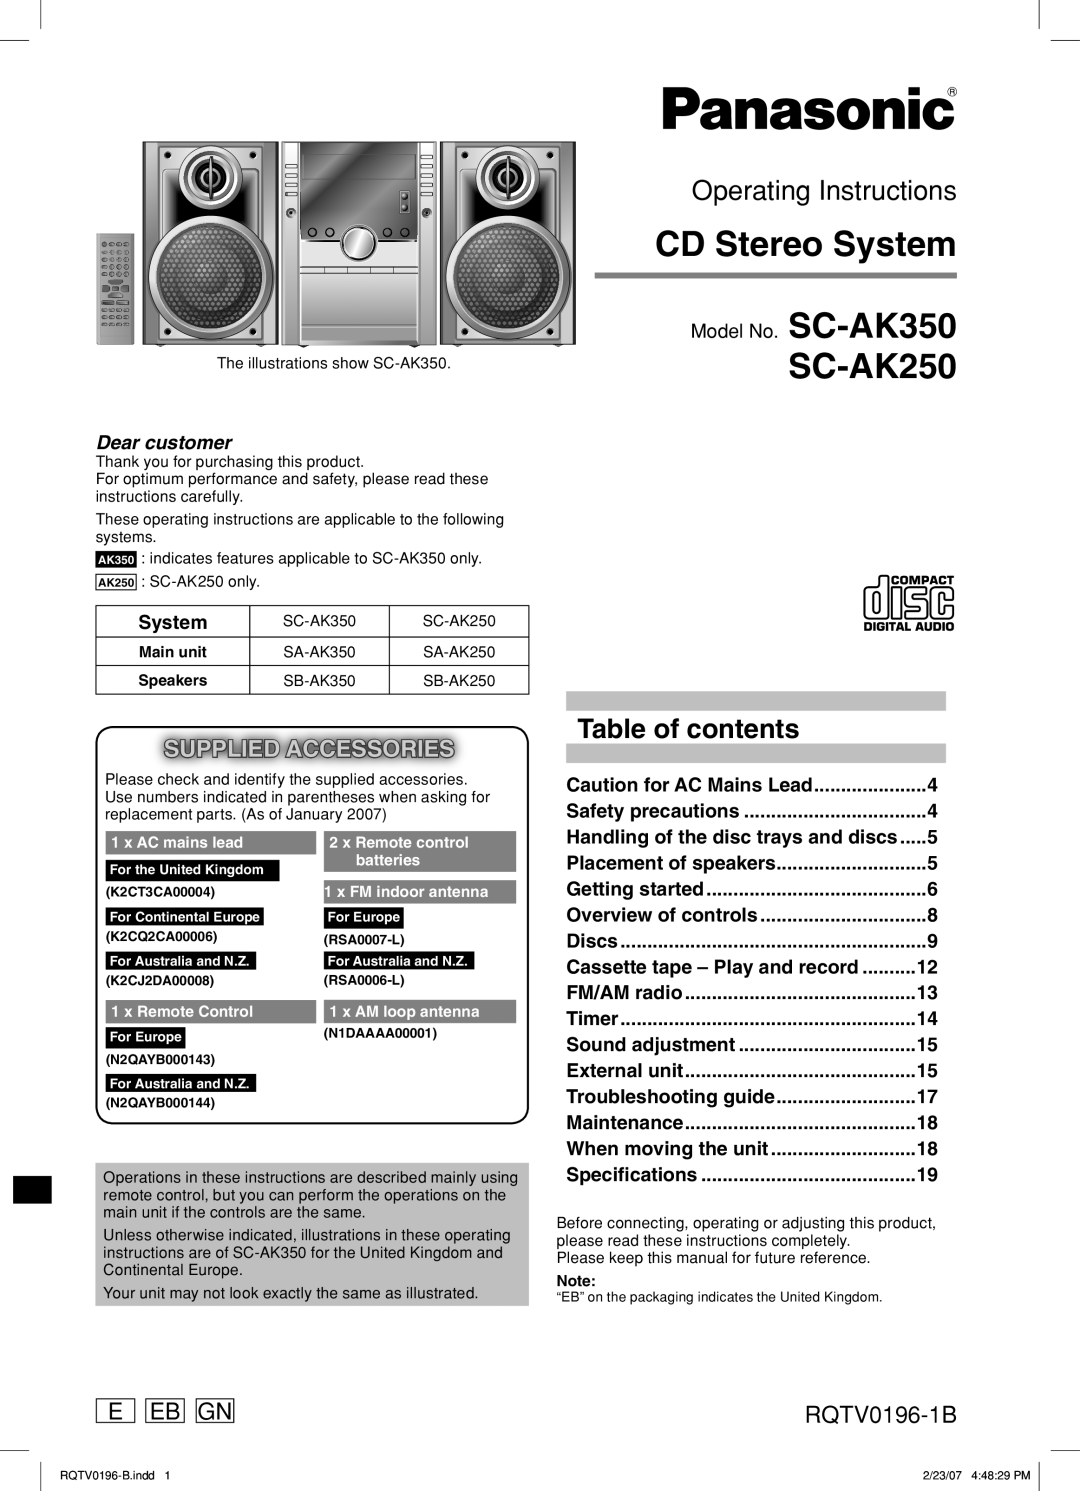 Panasonic SC-AK250 important safety instructions RQTV0199-2M, Important Safety Instructions, CD Stereo System 